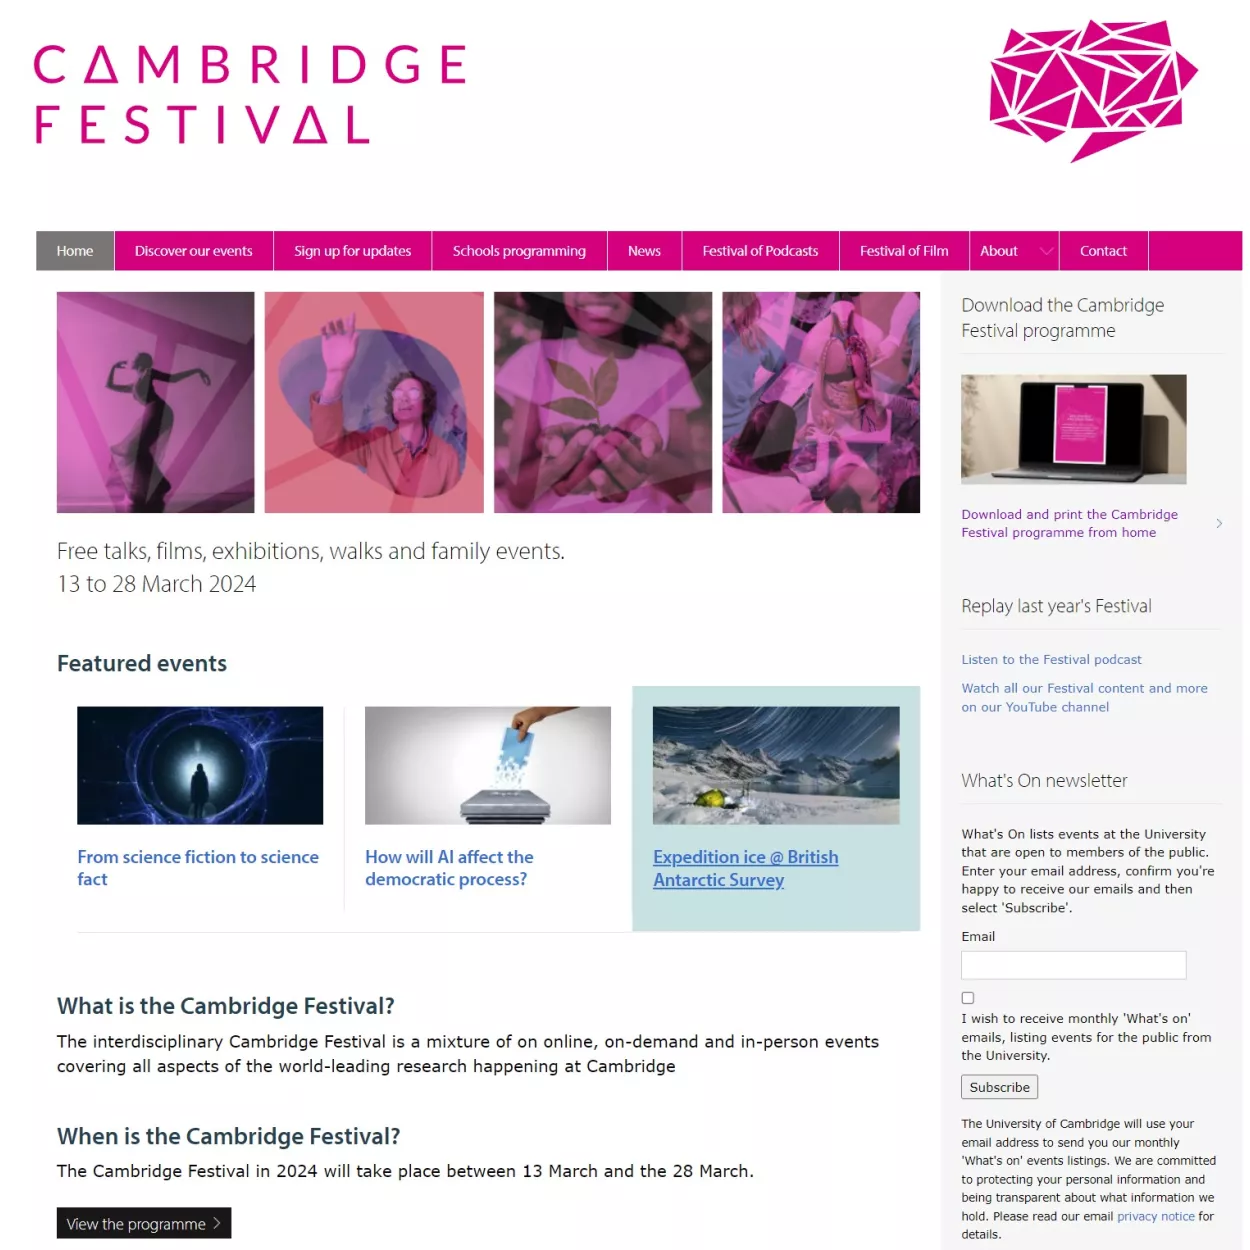 Clip of the Cambridge Festival Website